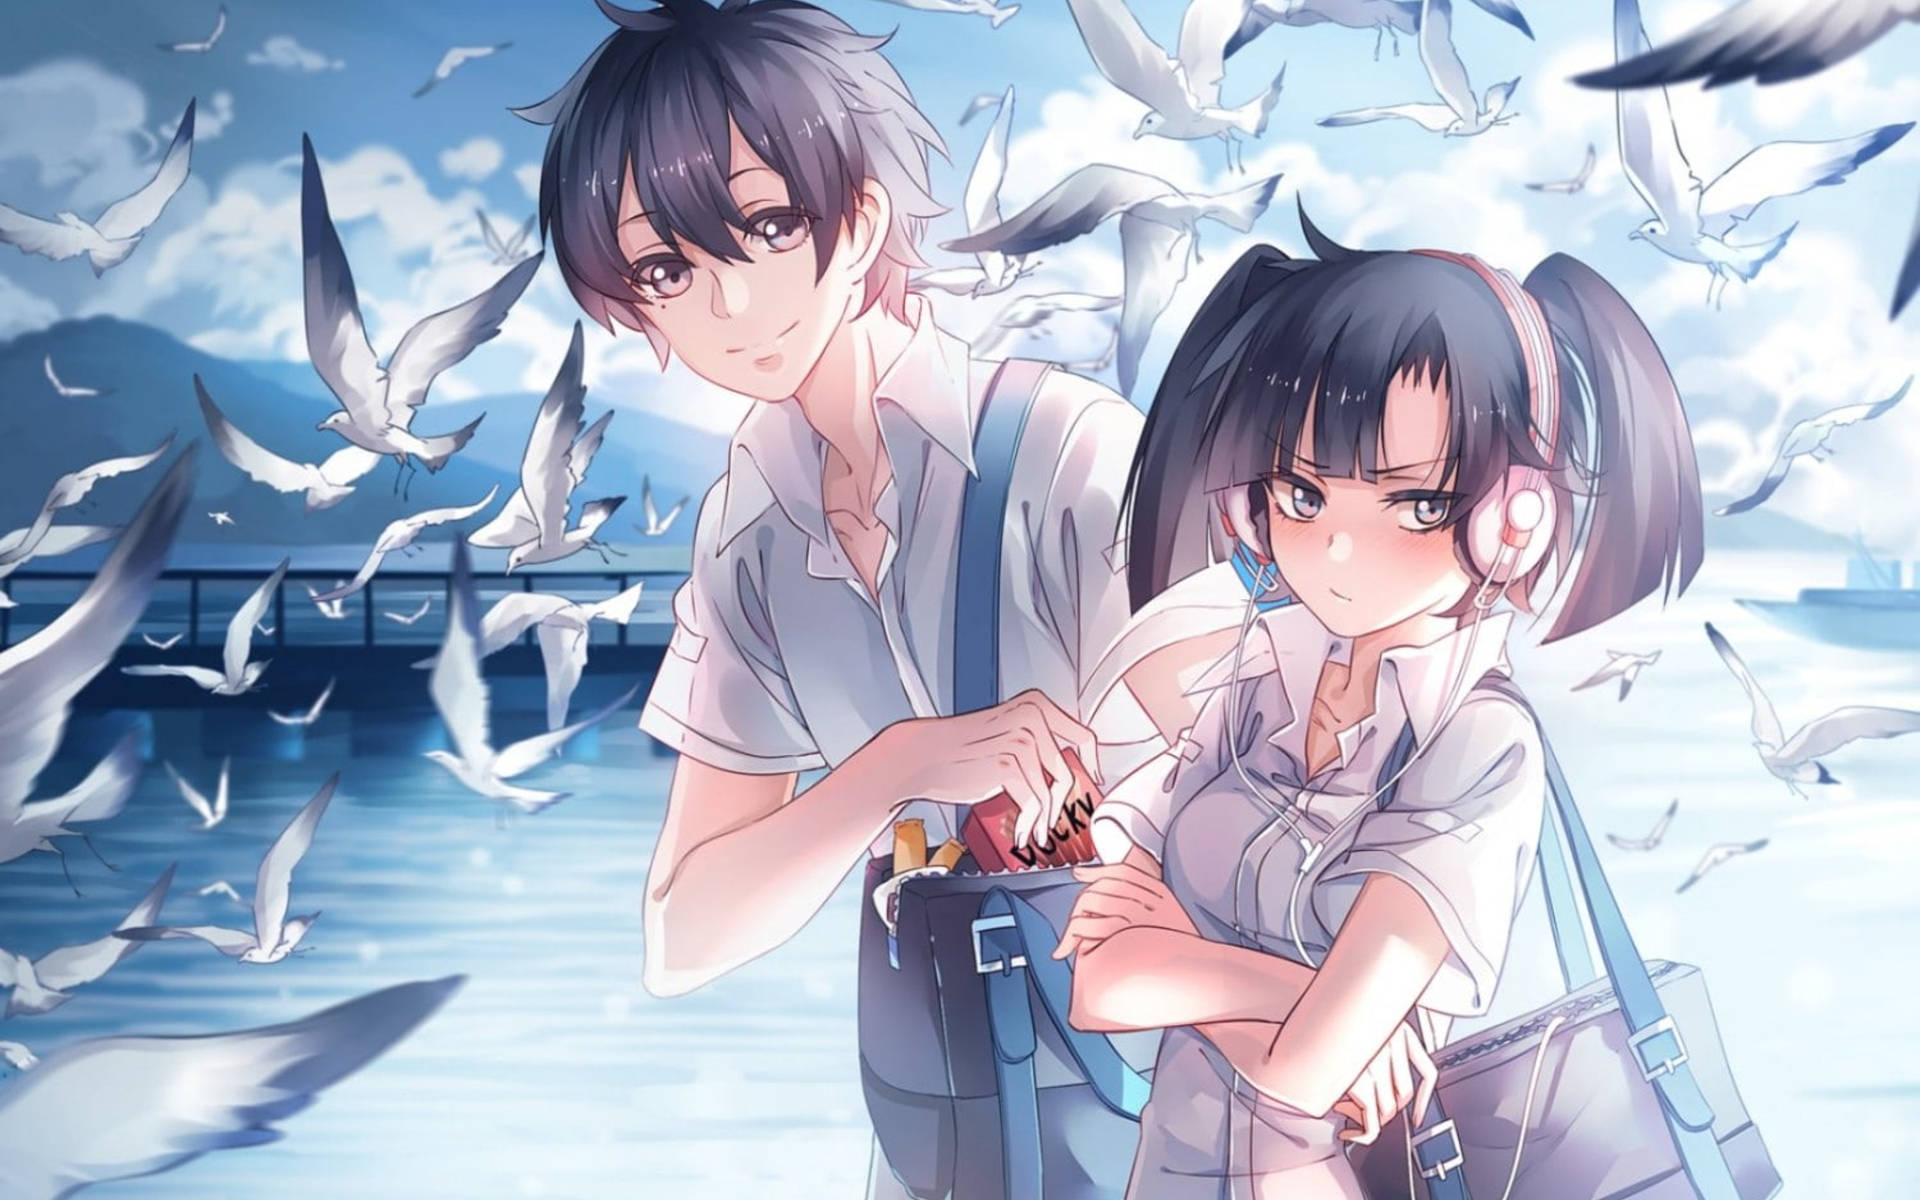 Anime Couple Girl and Boy Japanese Fantasy Illustration Spring Sakura  Flowers Background Stock Illustration - Illustration of flowers, couple:  272814243